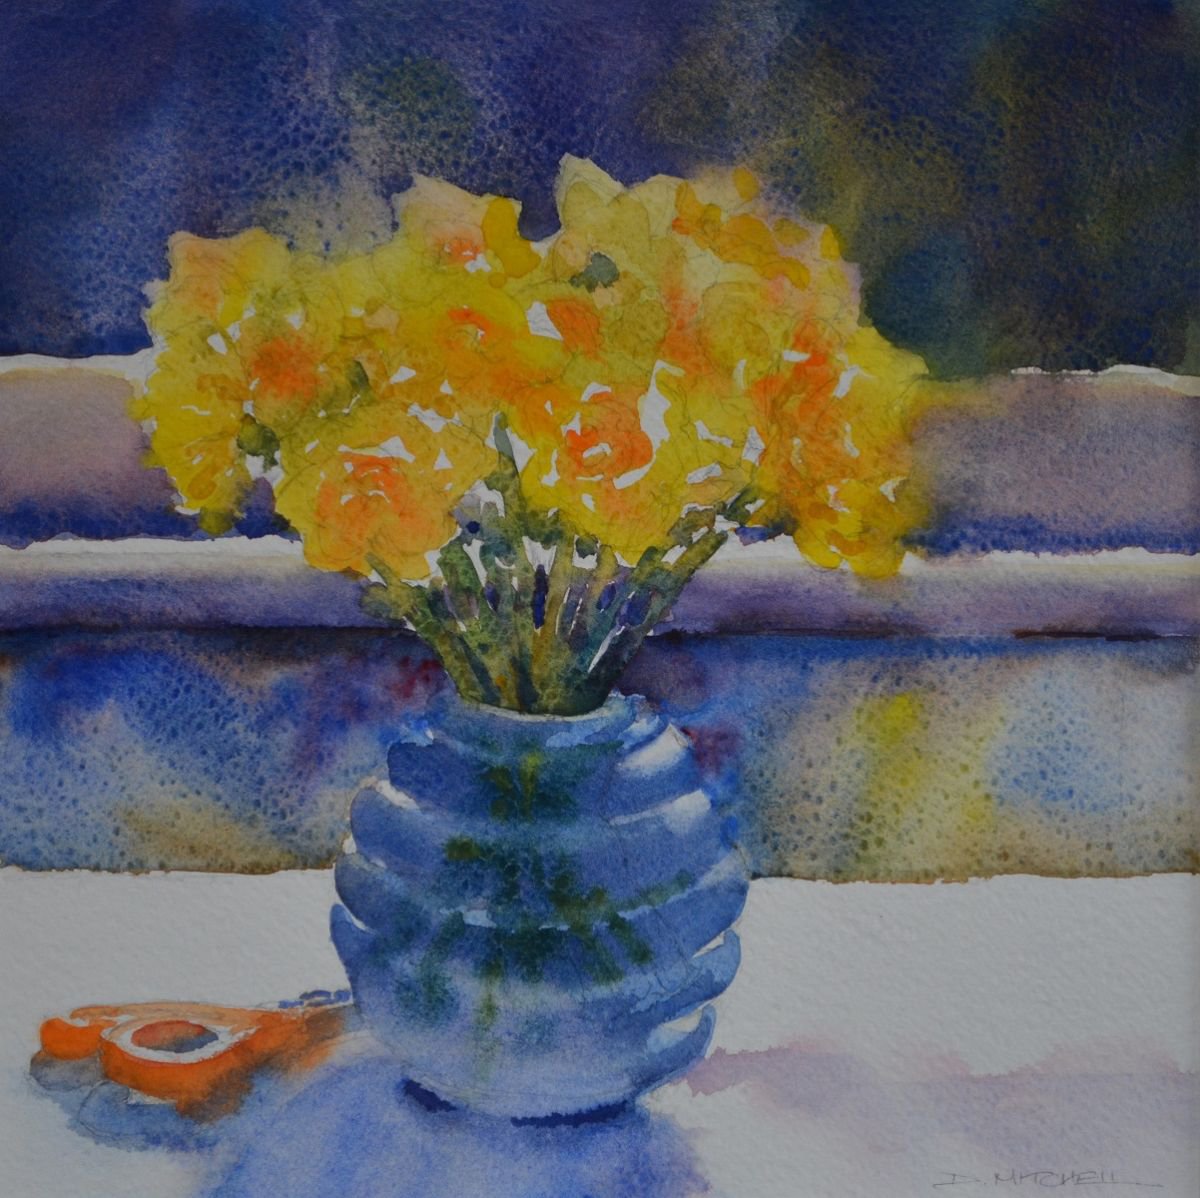 My Little Blue Vase by Denise Mitchell